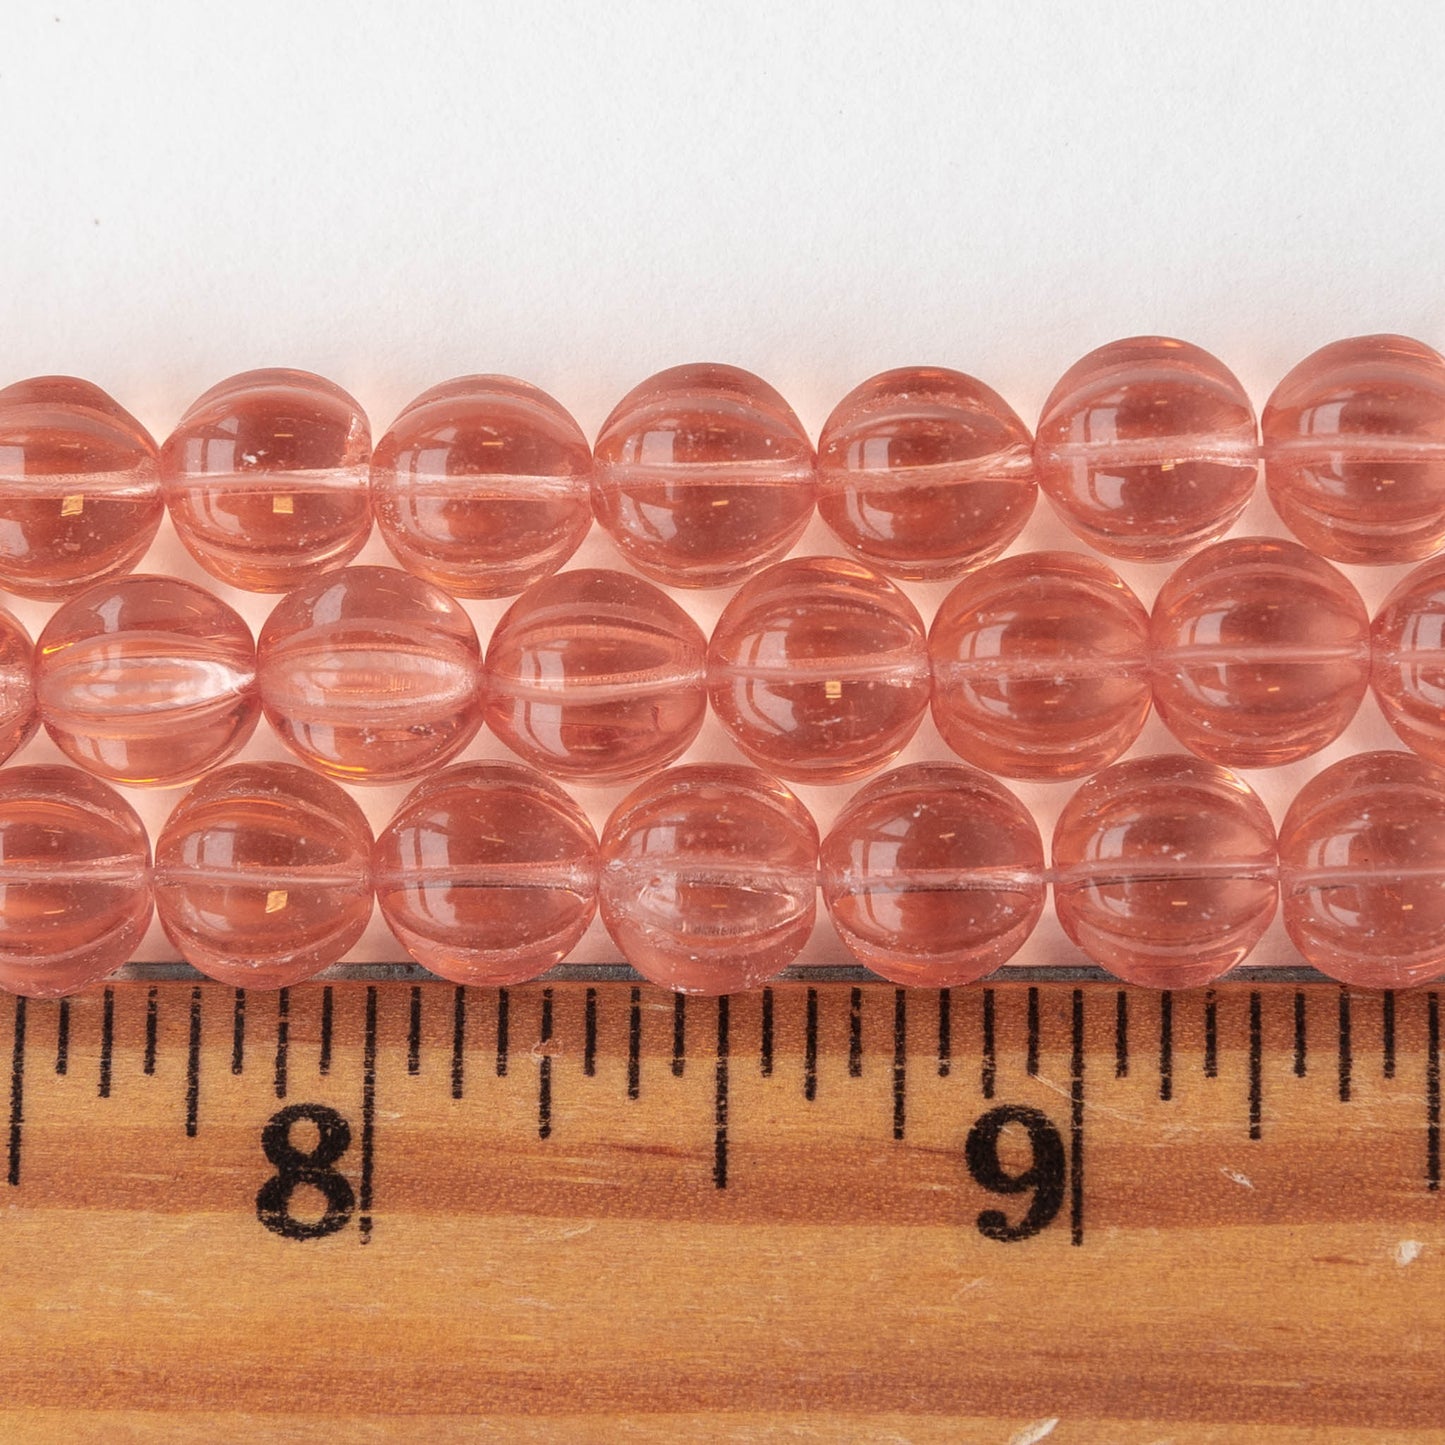 8mm Melon Bead - Rosaline - 20 Beads